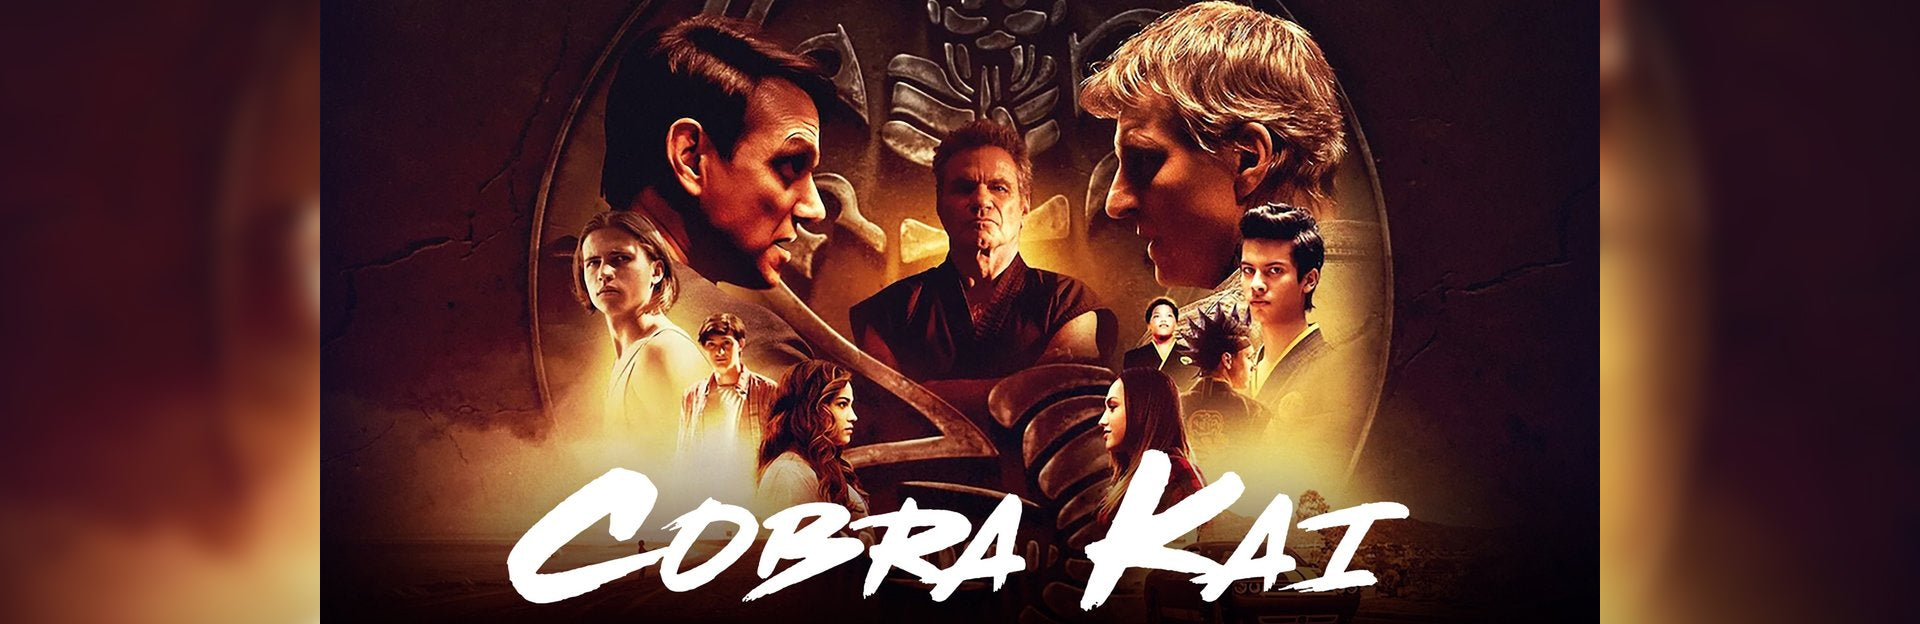 Cobra Kai' Season 5: Details, Spoilers, Release Date, Cast, More